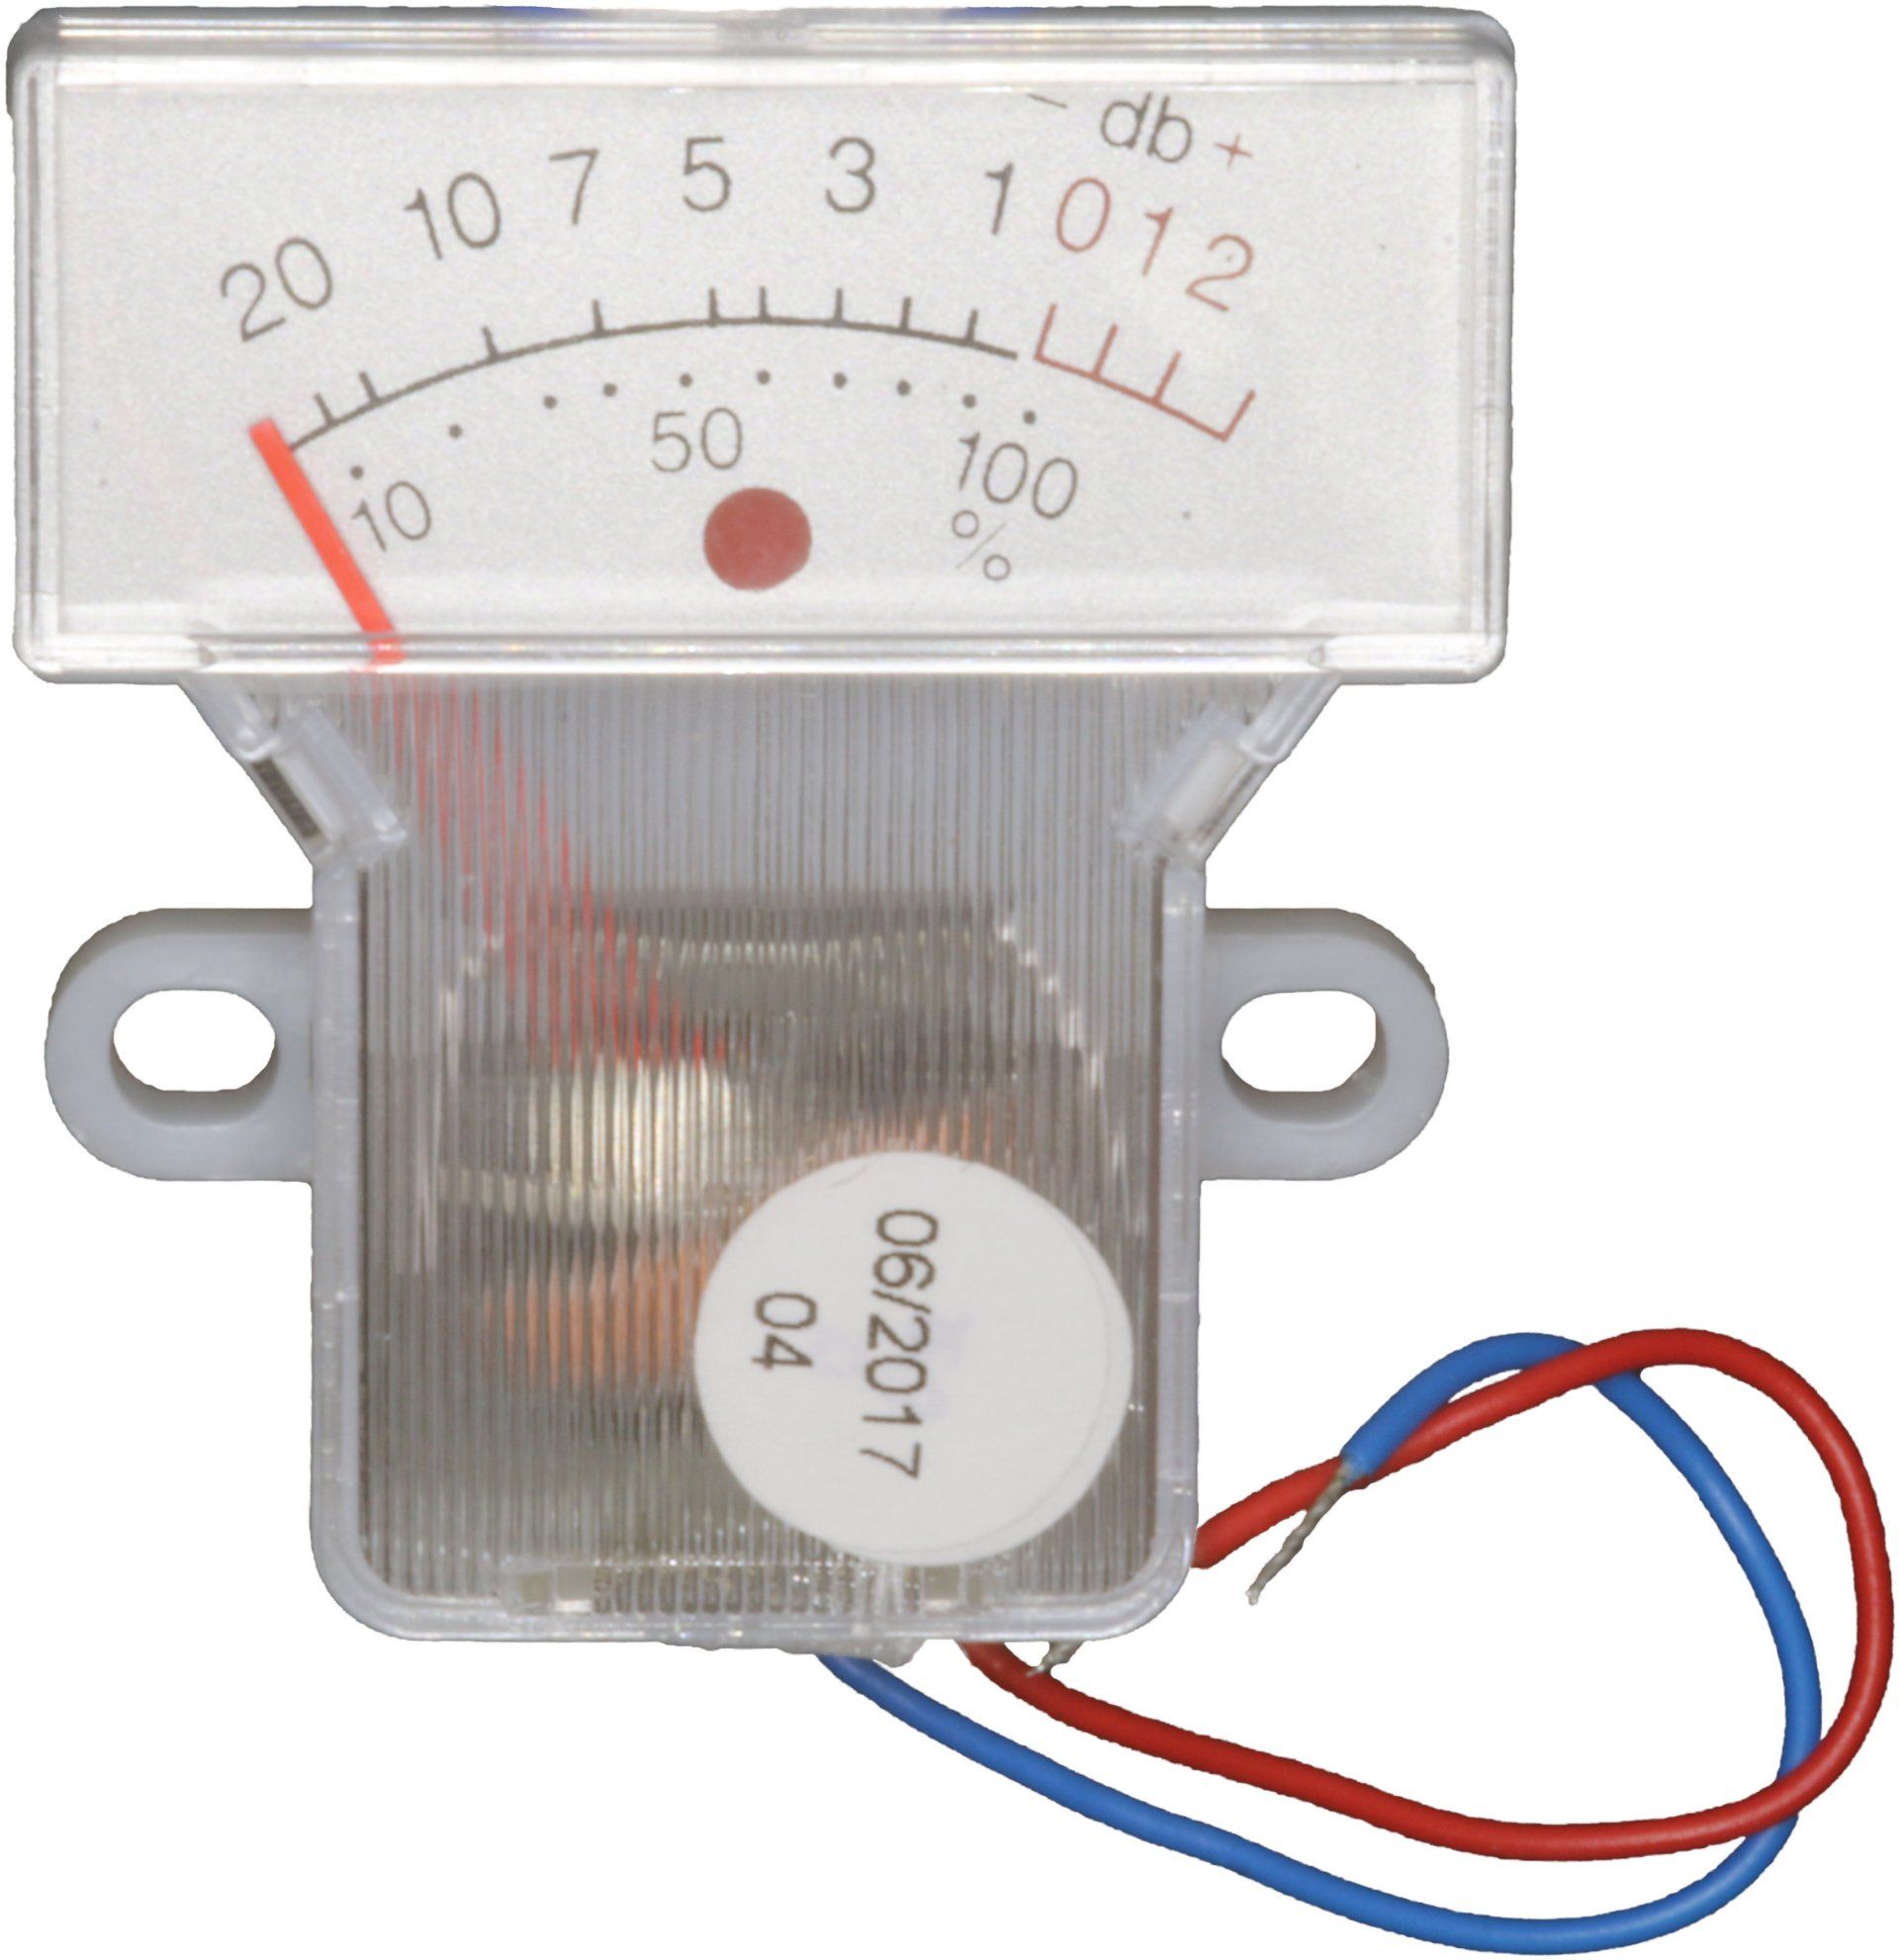 VU meter for Revox A77 revox-online